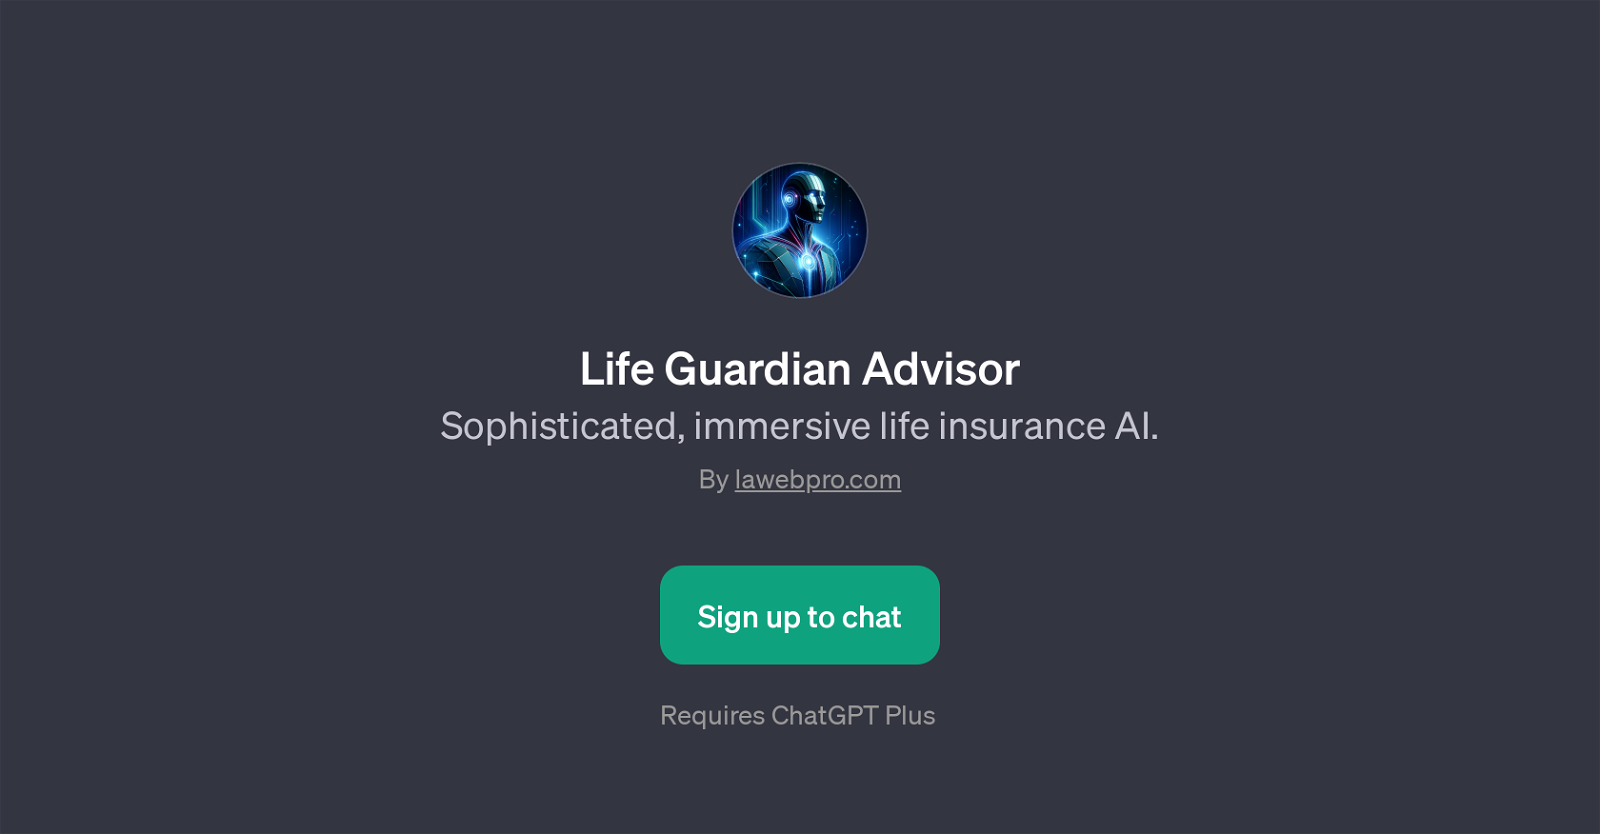 Life Guardian Advisor website